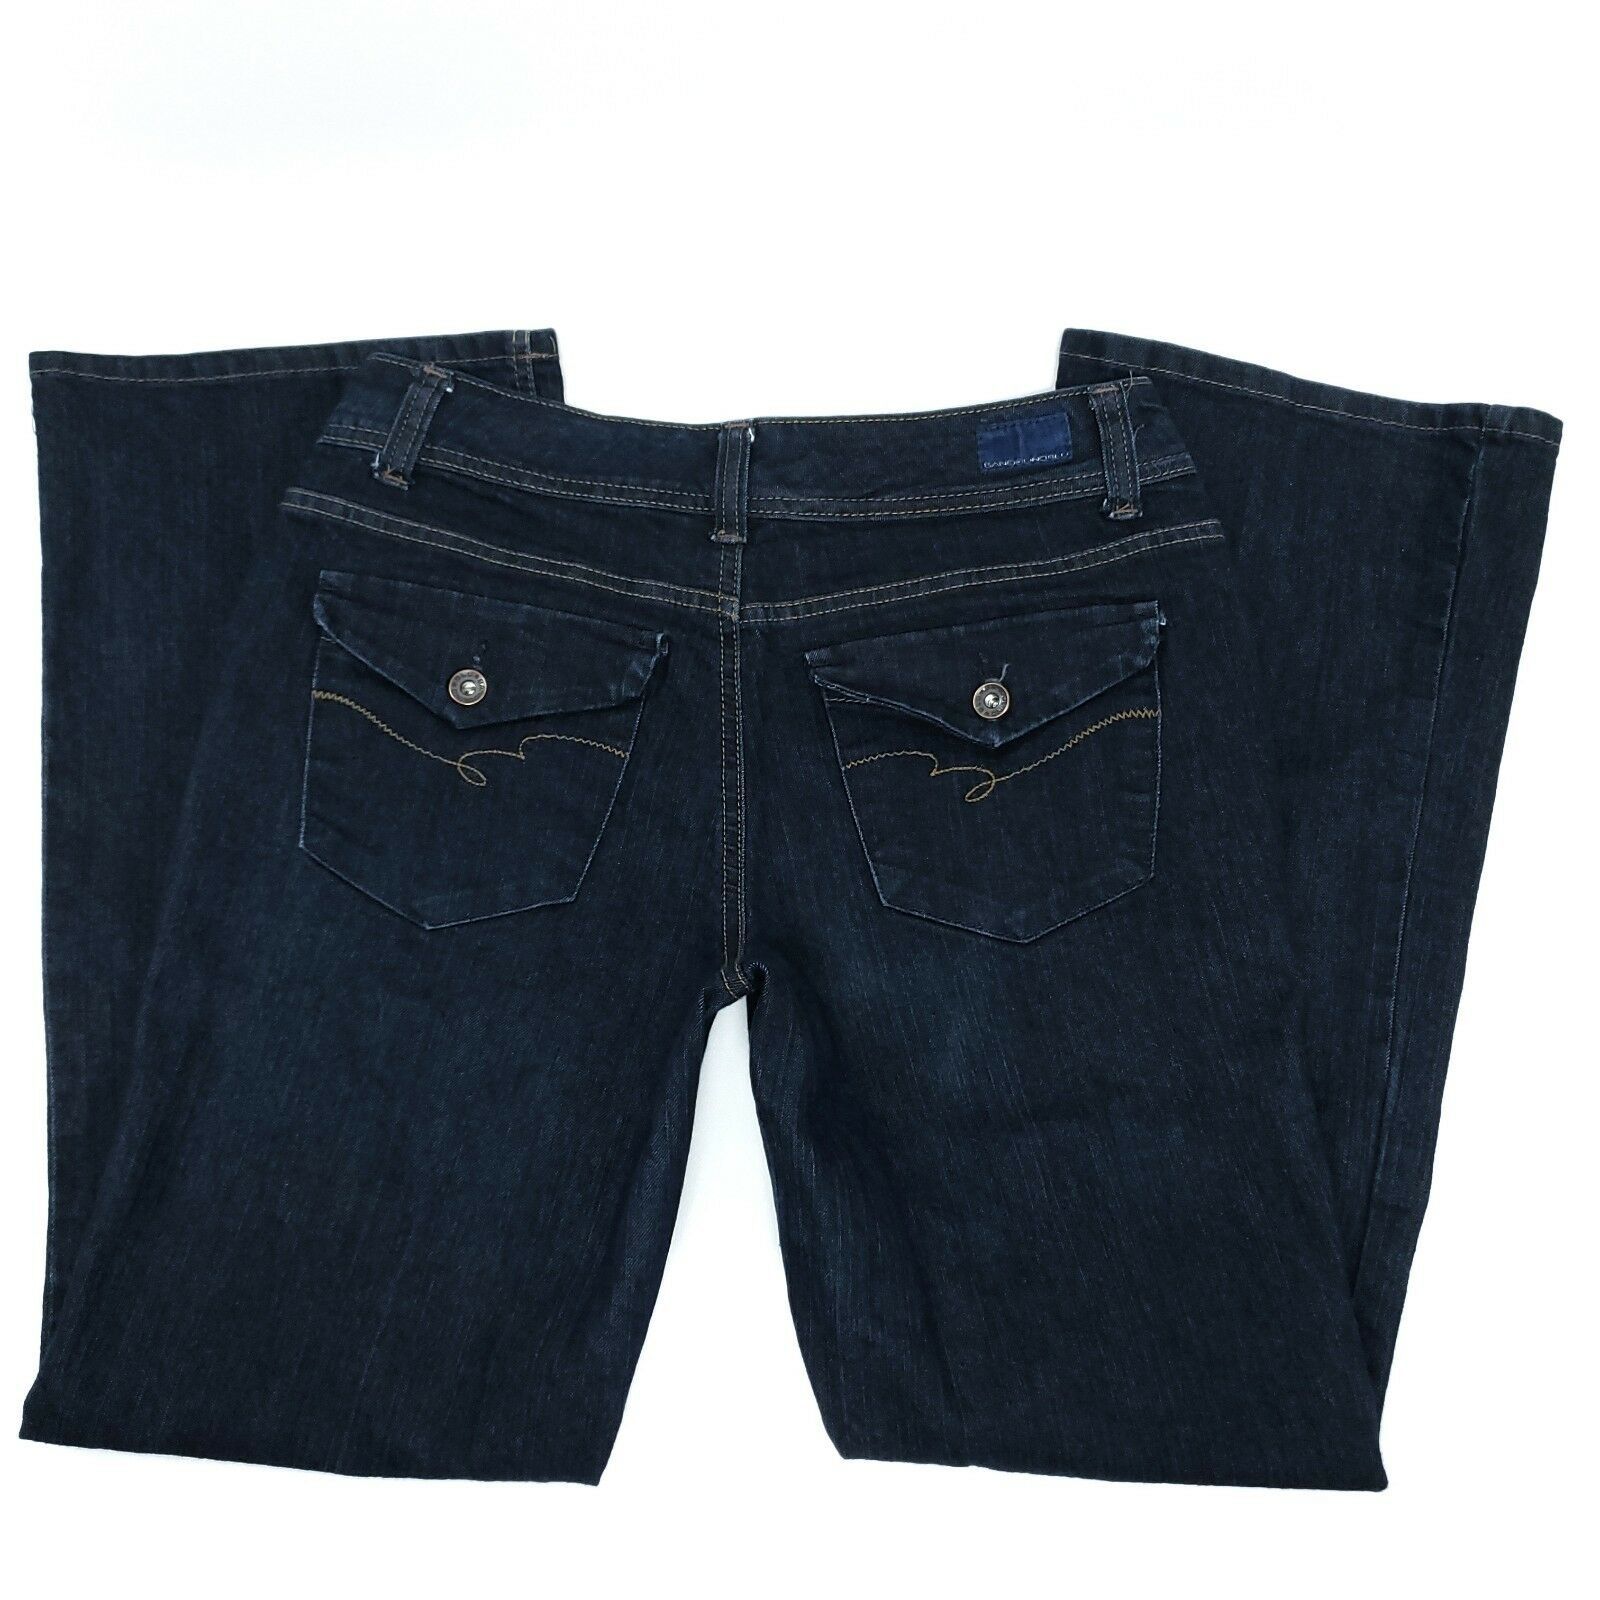 Bandolinoblu jeans Bootcut Jeans For Women Size 10P Petites - Jeans